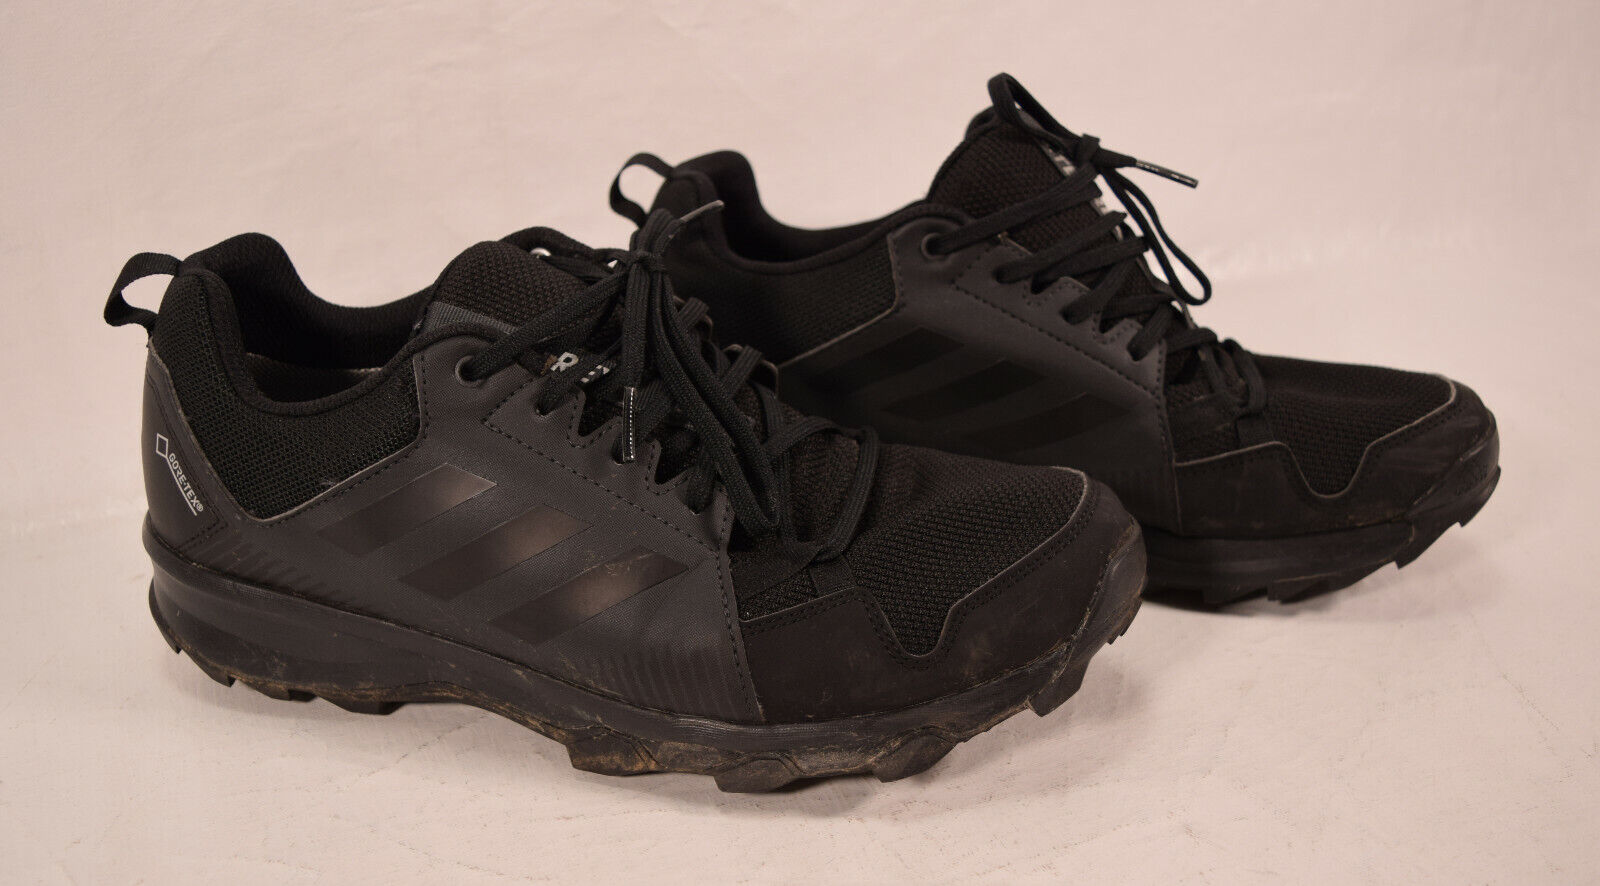 Adidas Mens Shoes Terrex Tracerocker GTX CM7593 Black US | eBay